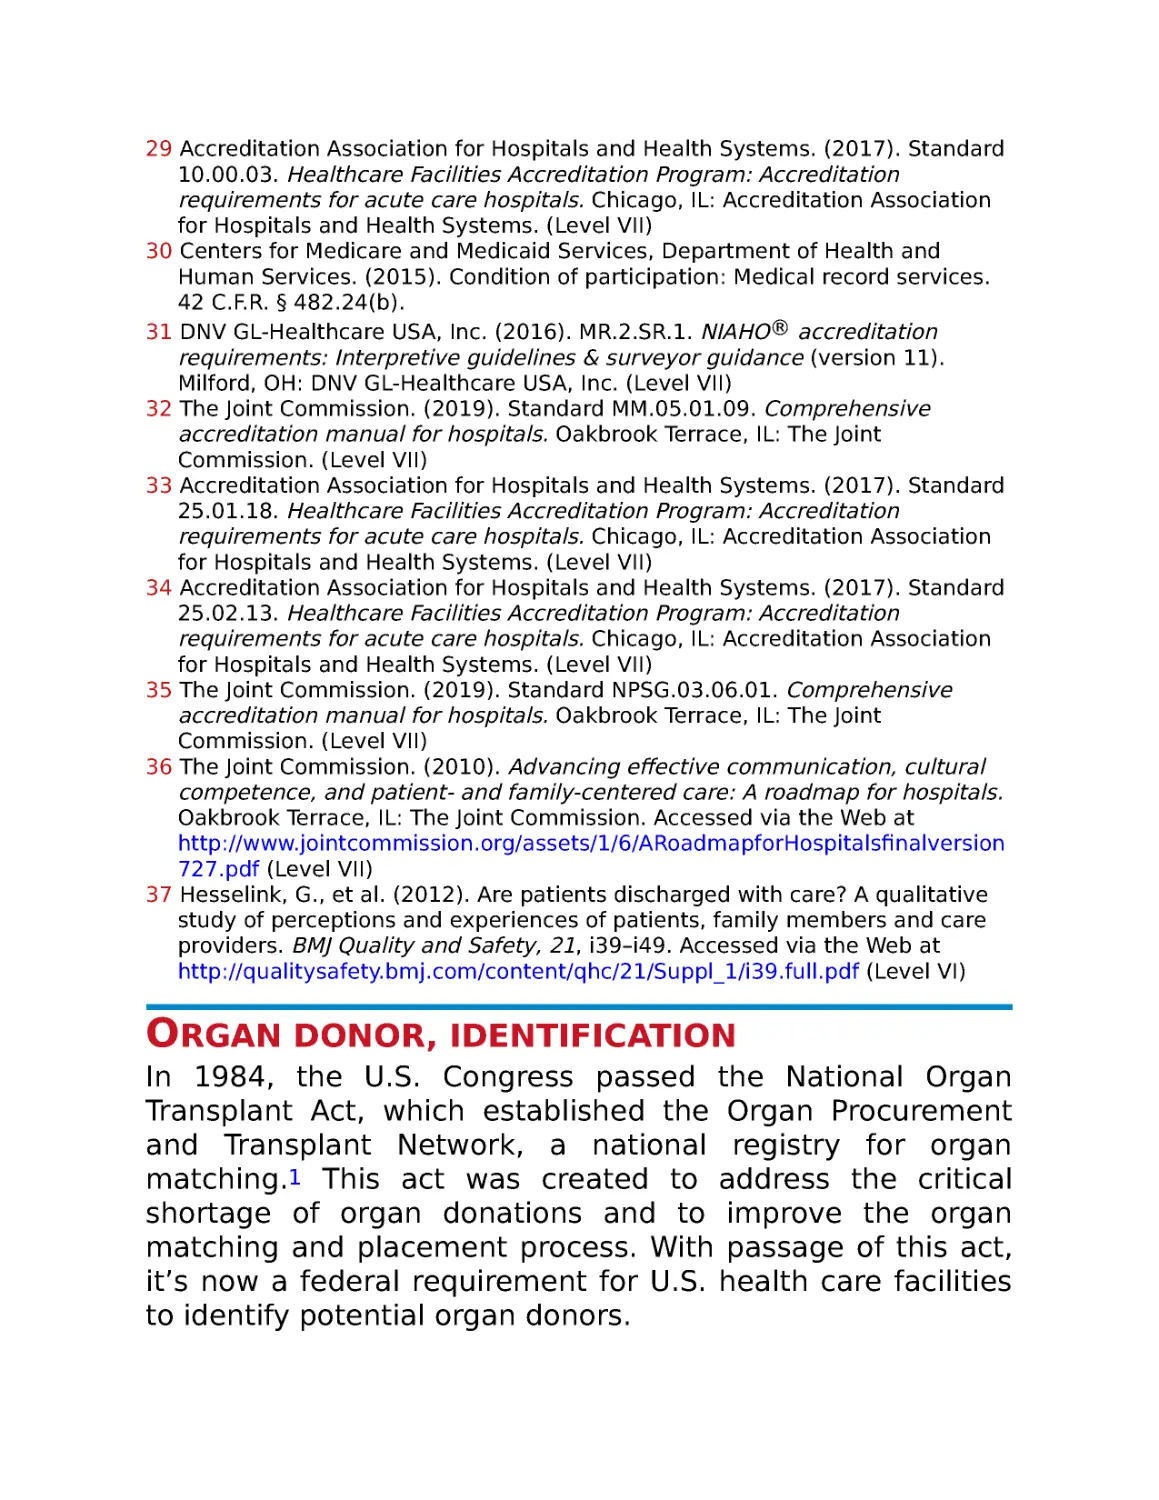 Organ donor, identification